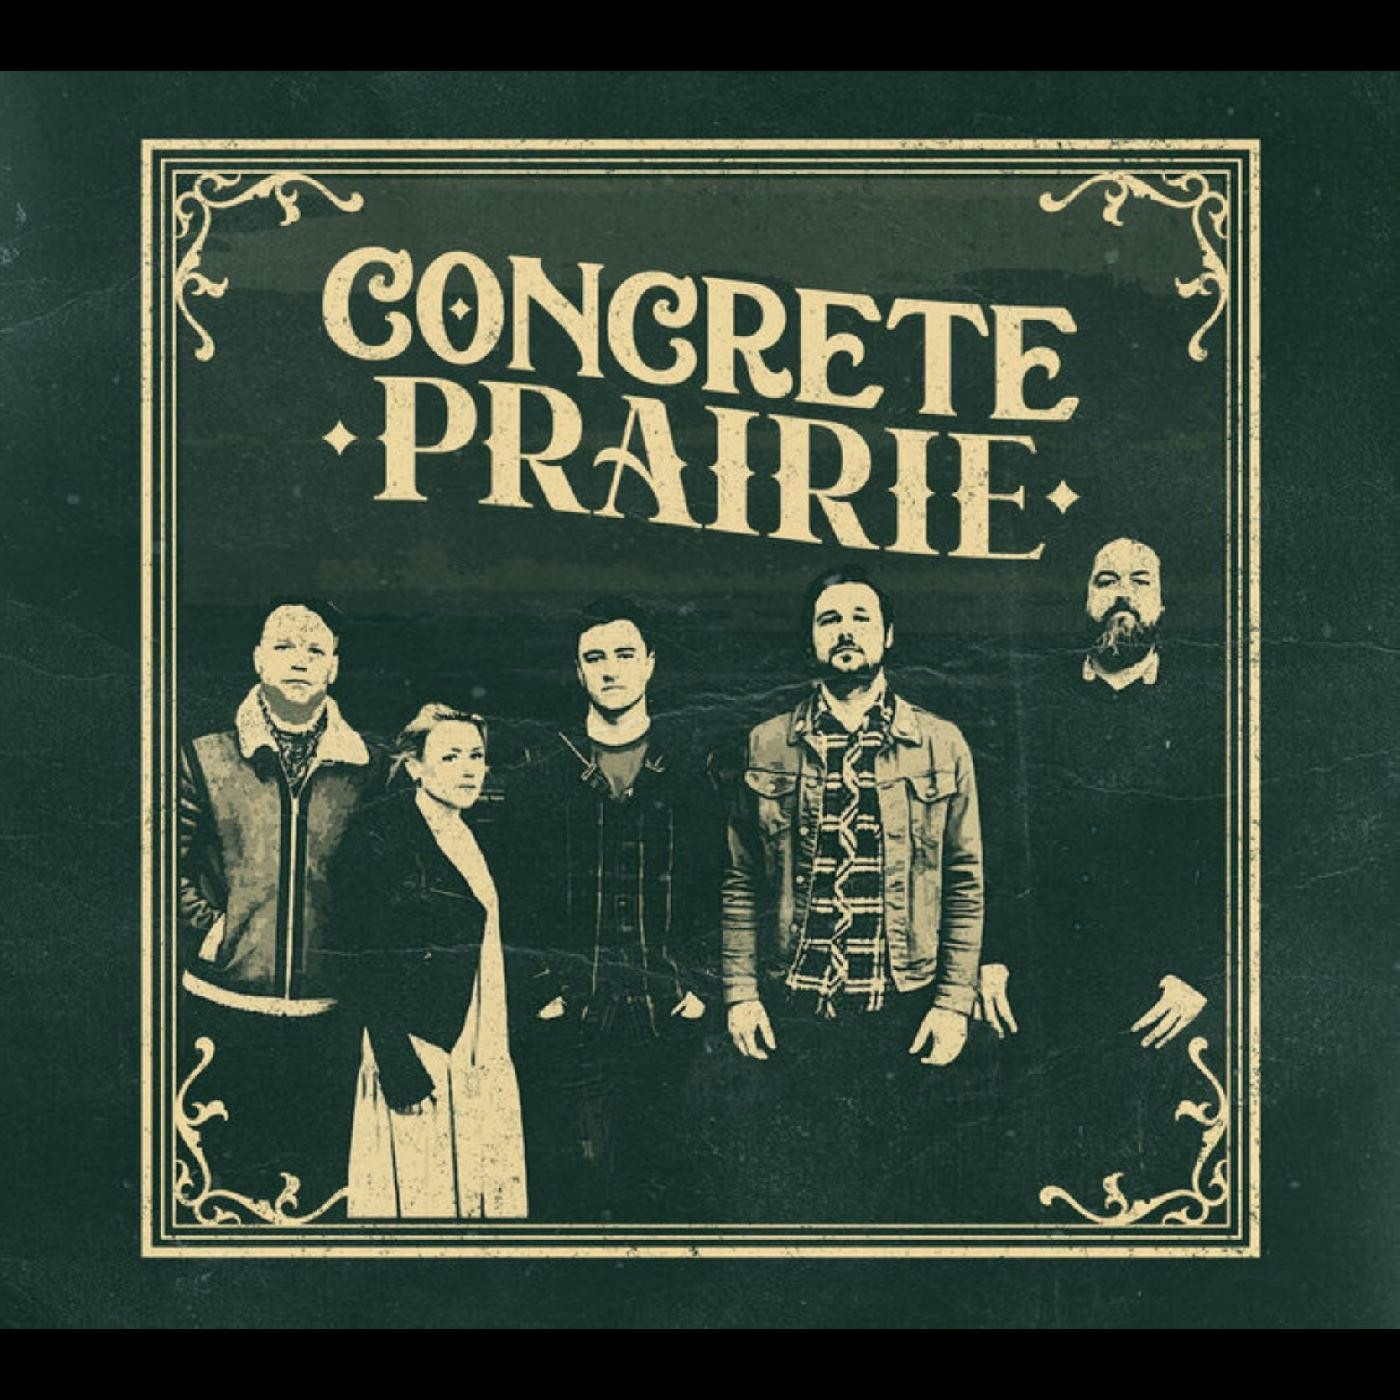 Album artwork for Album artwork for Concrete Prairie by Concrete Prairie by Concrete Prairie - Concrete Prairie